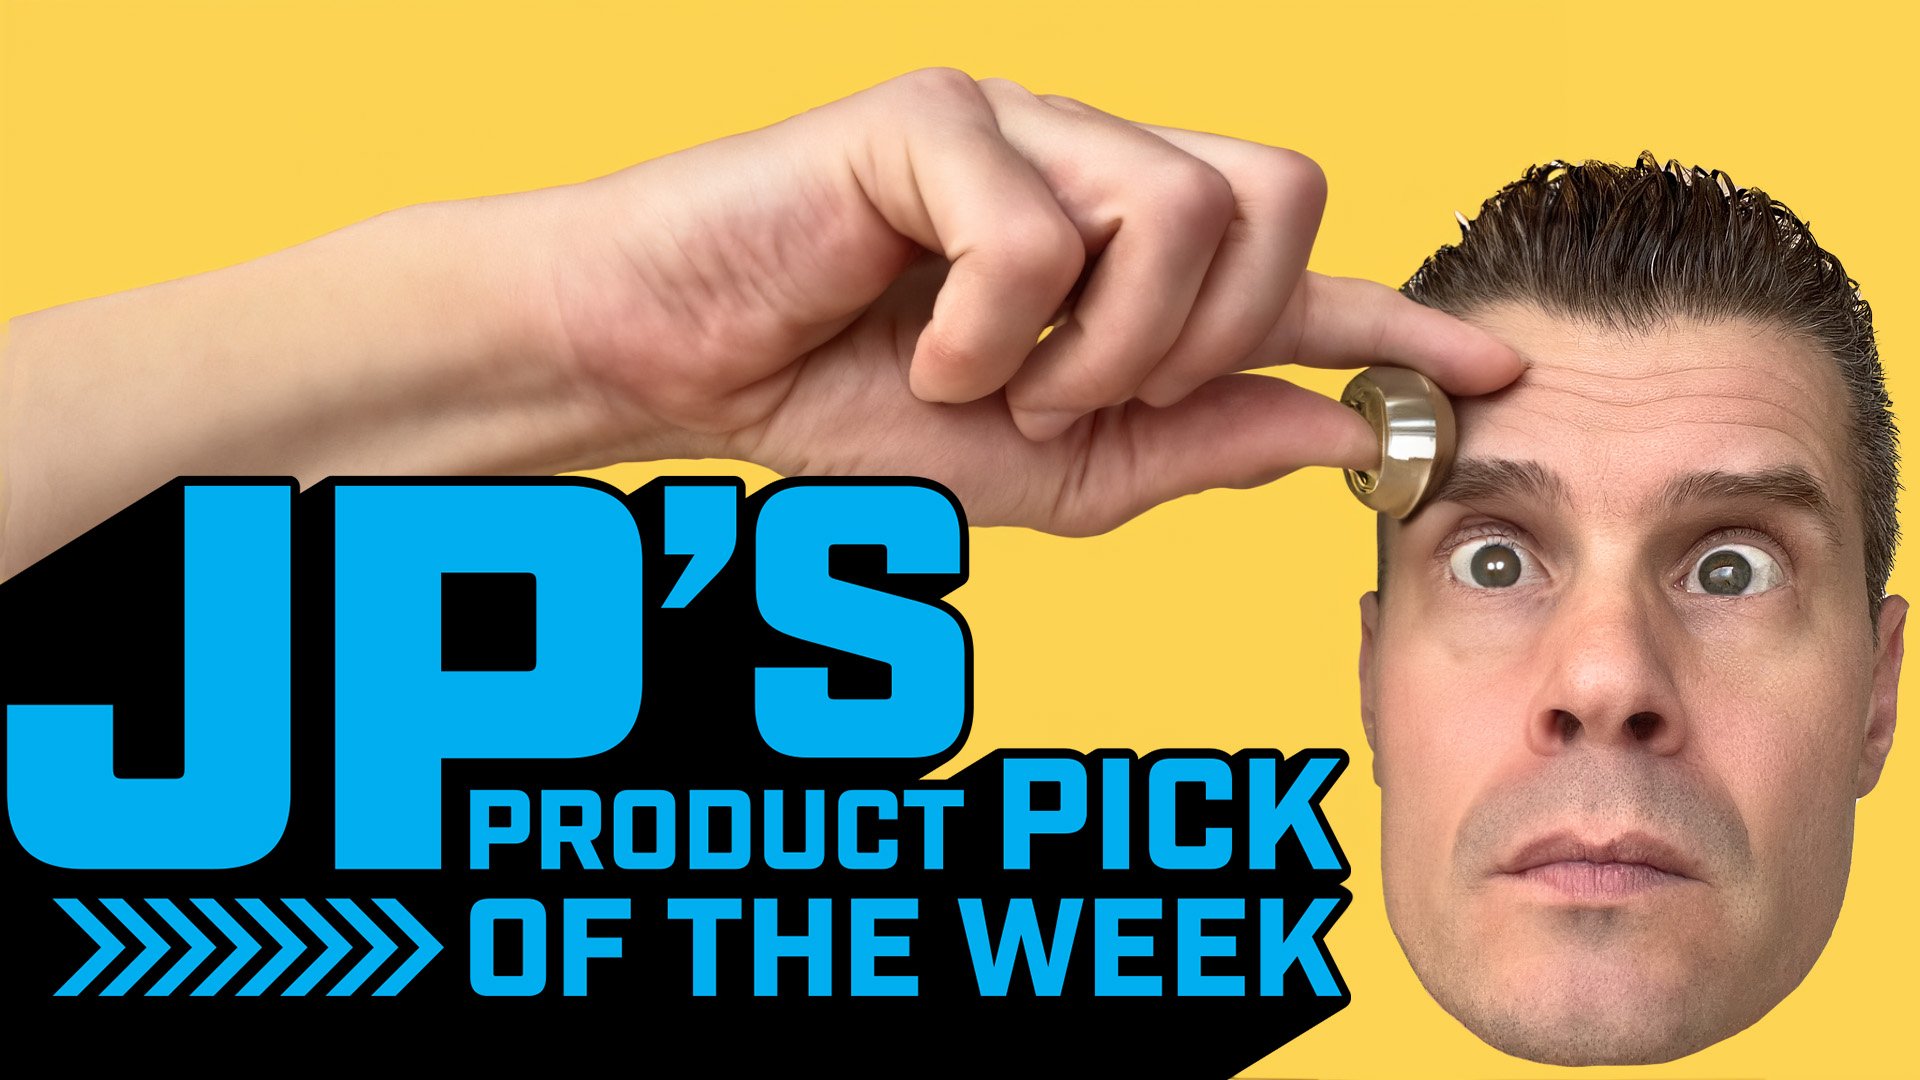 Escolha de produto da semana do JP - 4:6 EST HOJE! 6/23/XNUMX @adafruit #adafruit #newproductpick